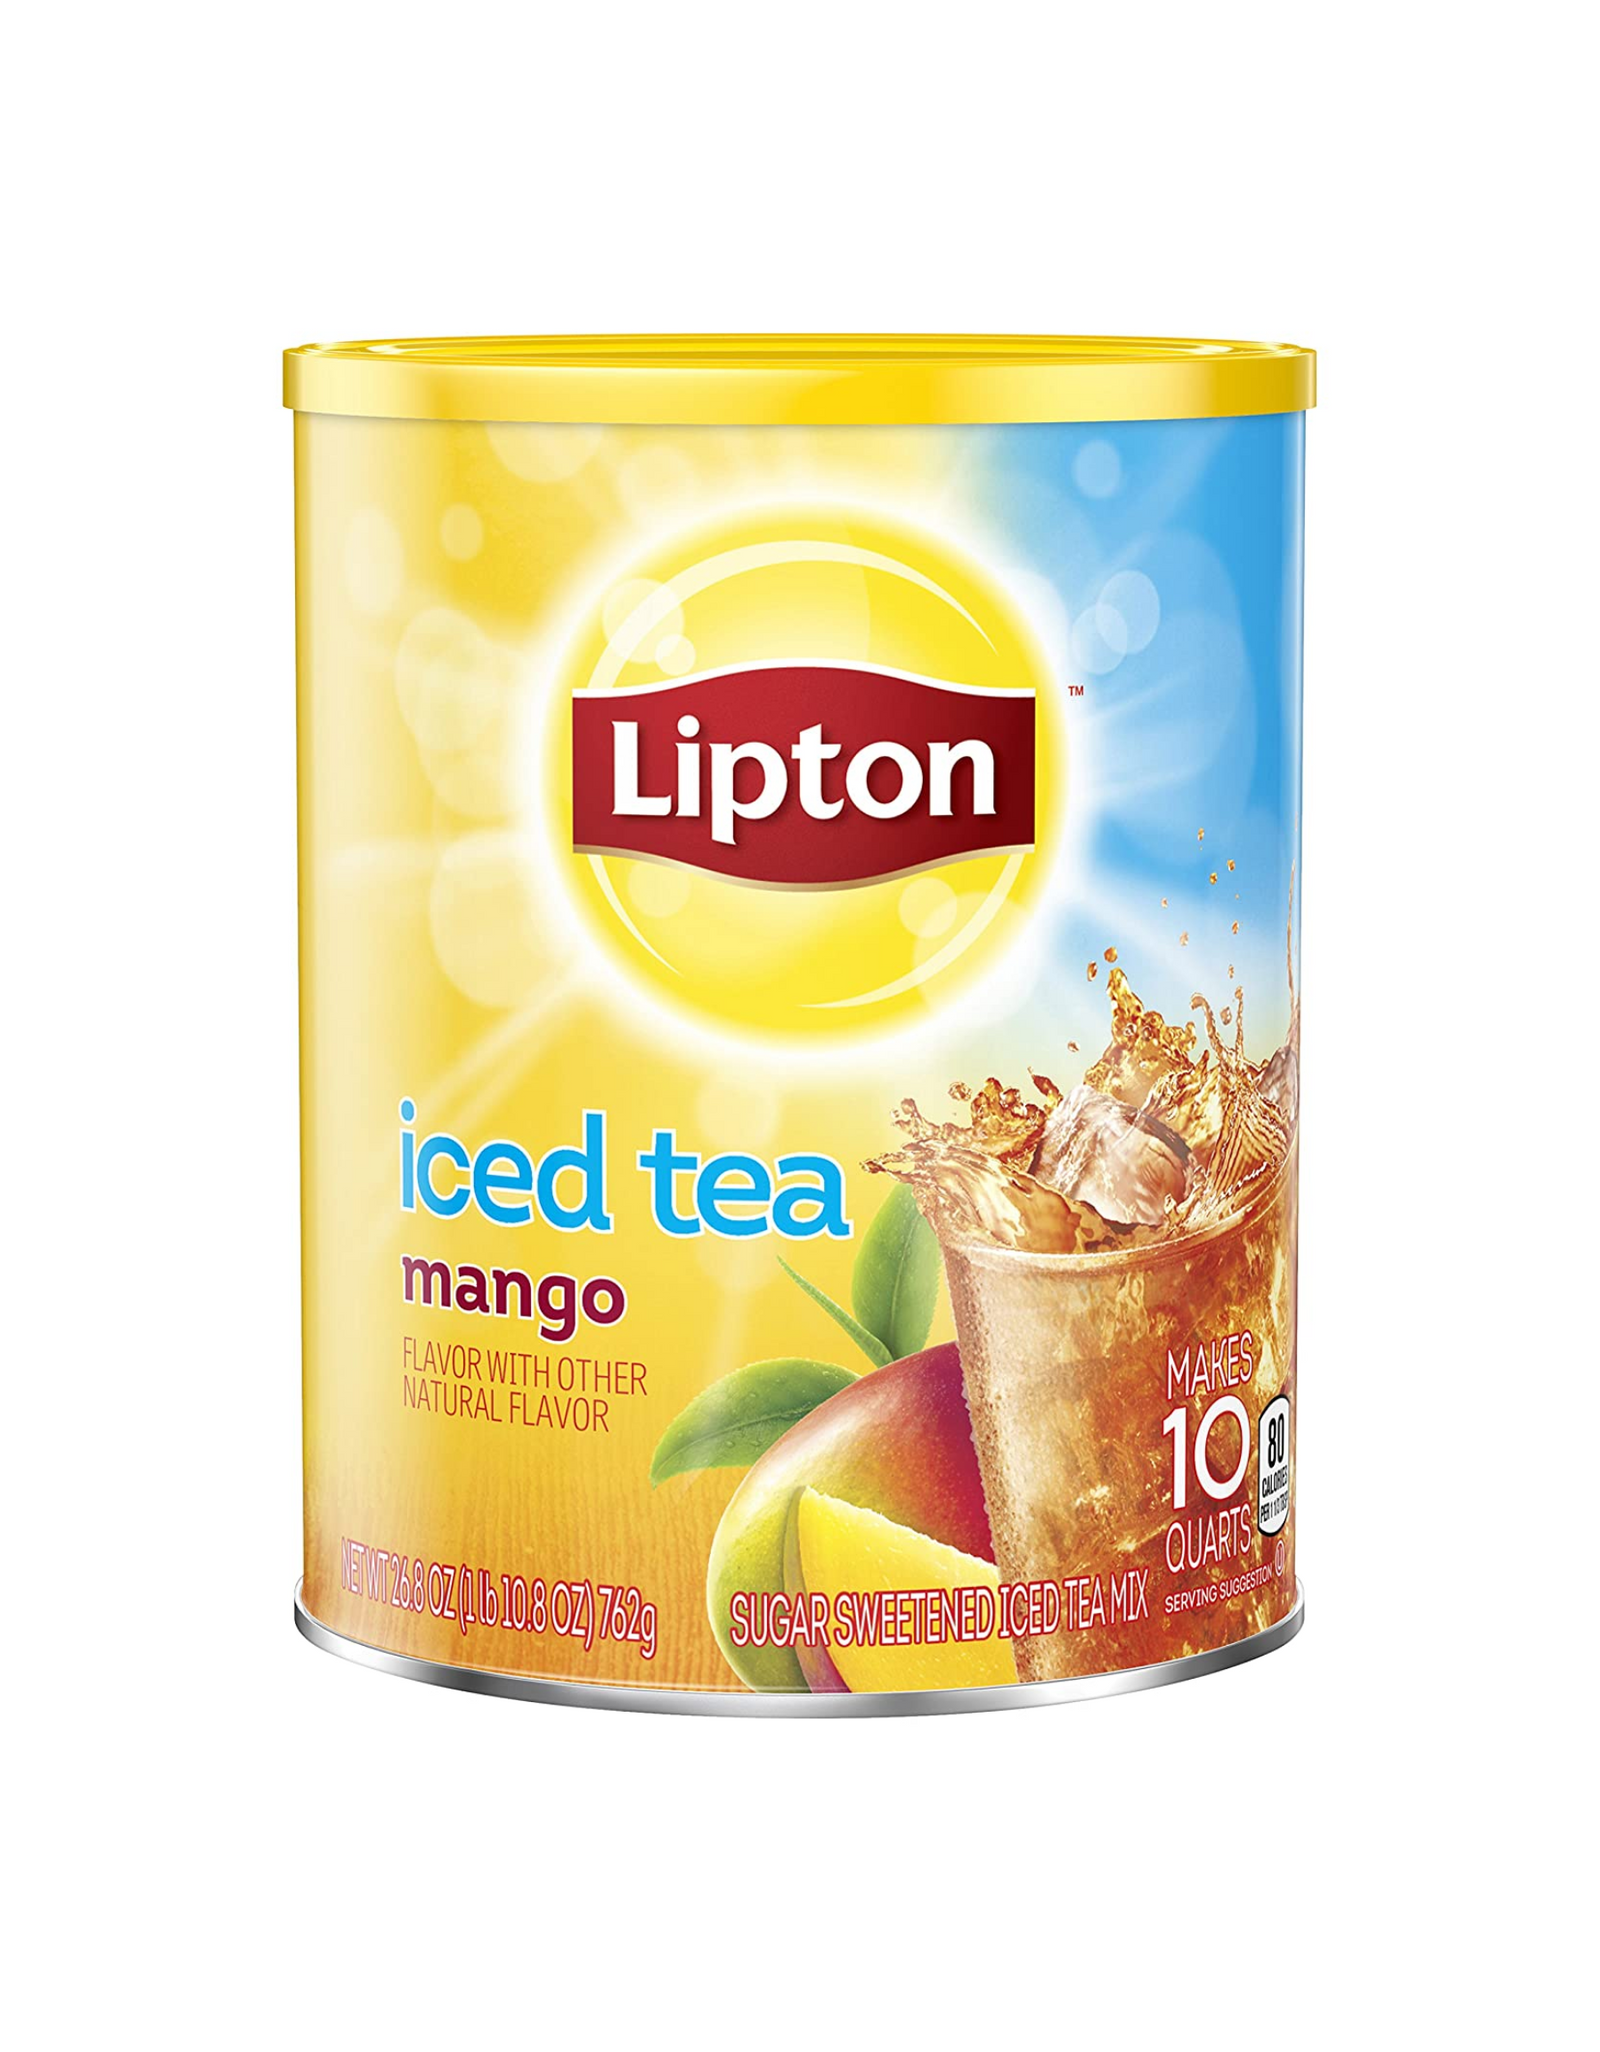 Lipton Iced Tea Mix, Iced Tea Mango Sweetened Flavor, Makes 10 Quart (Pack of 6)